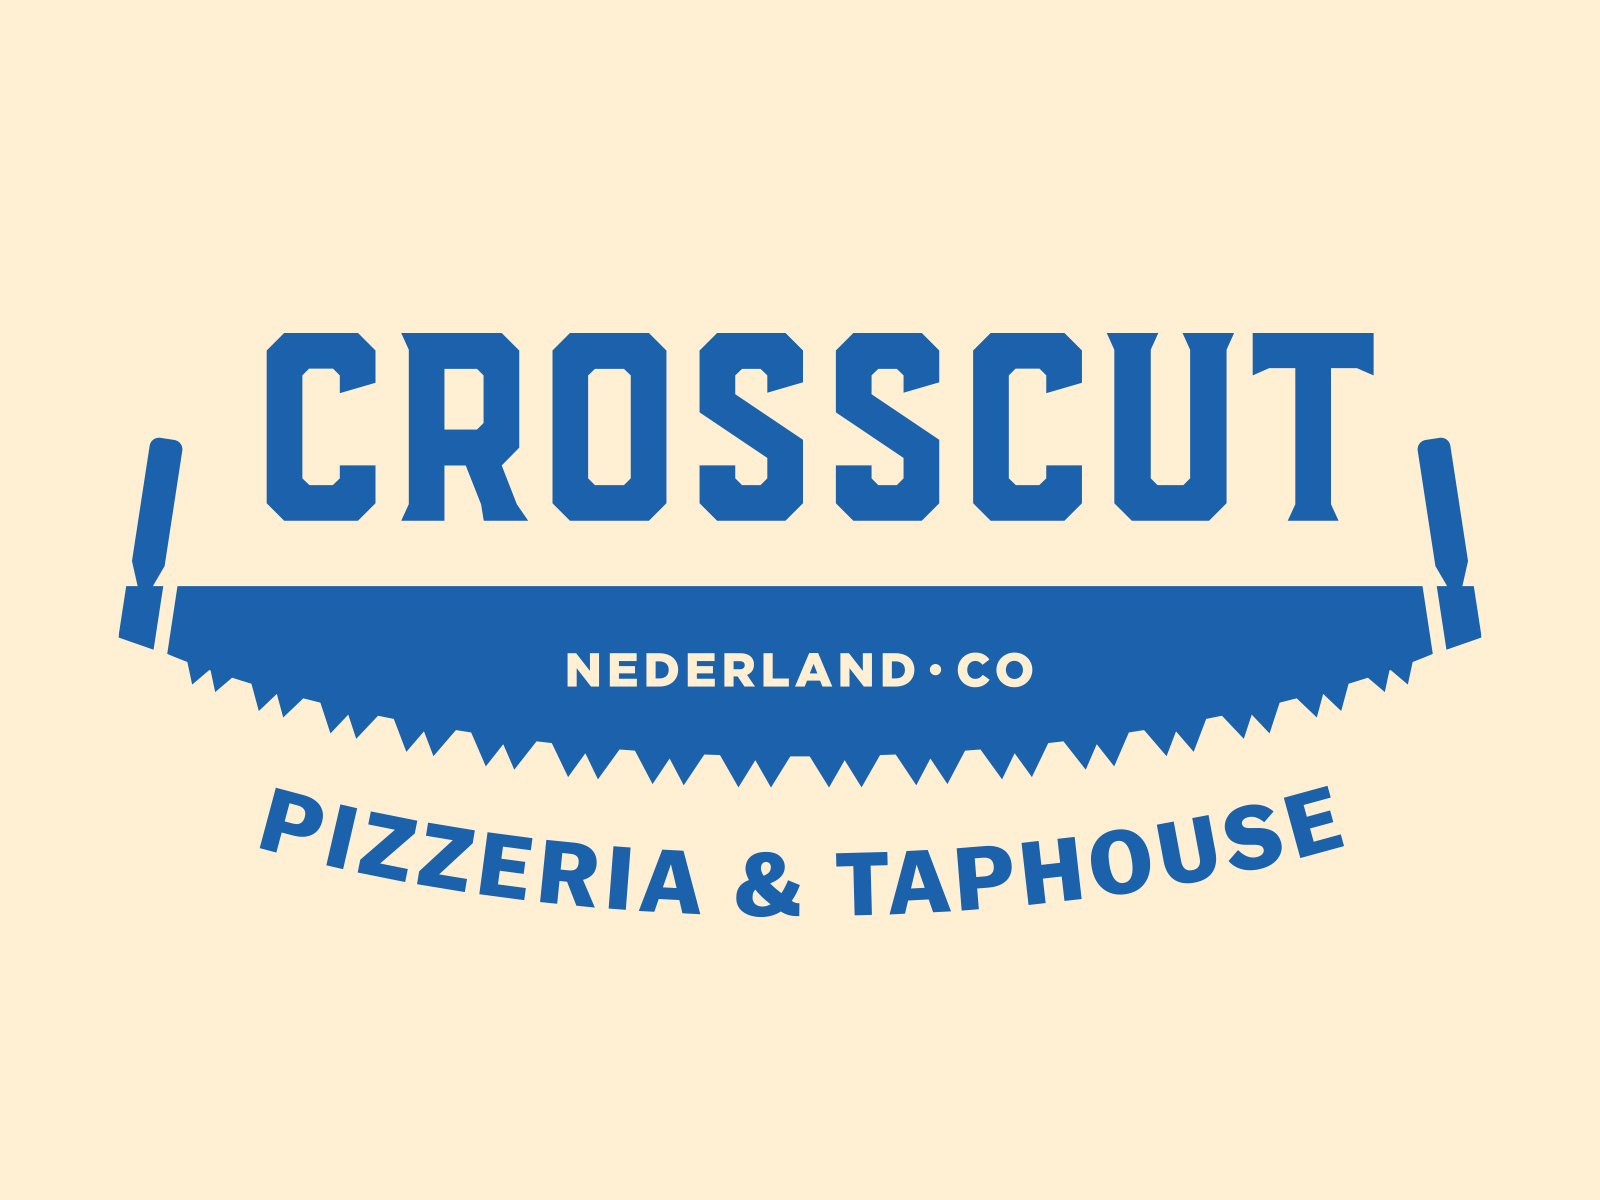 Crosscut Logo - After